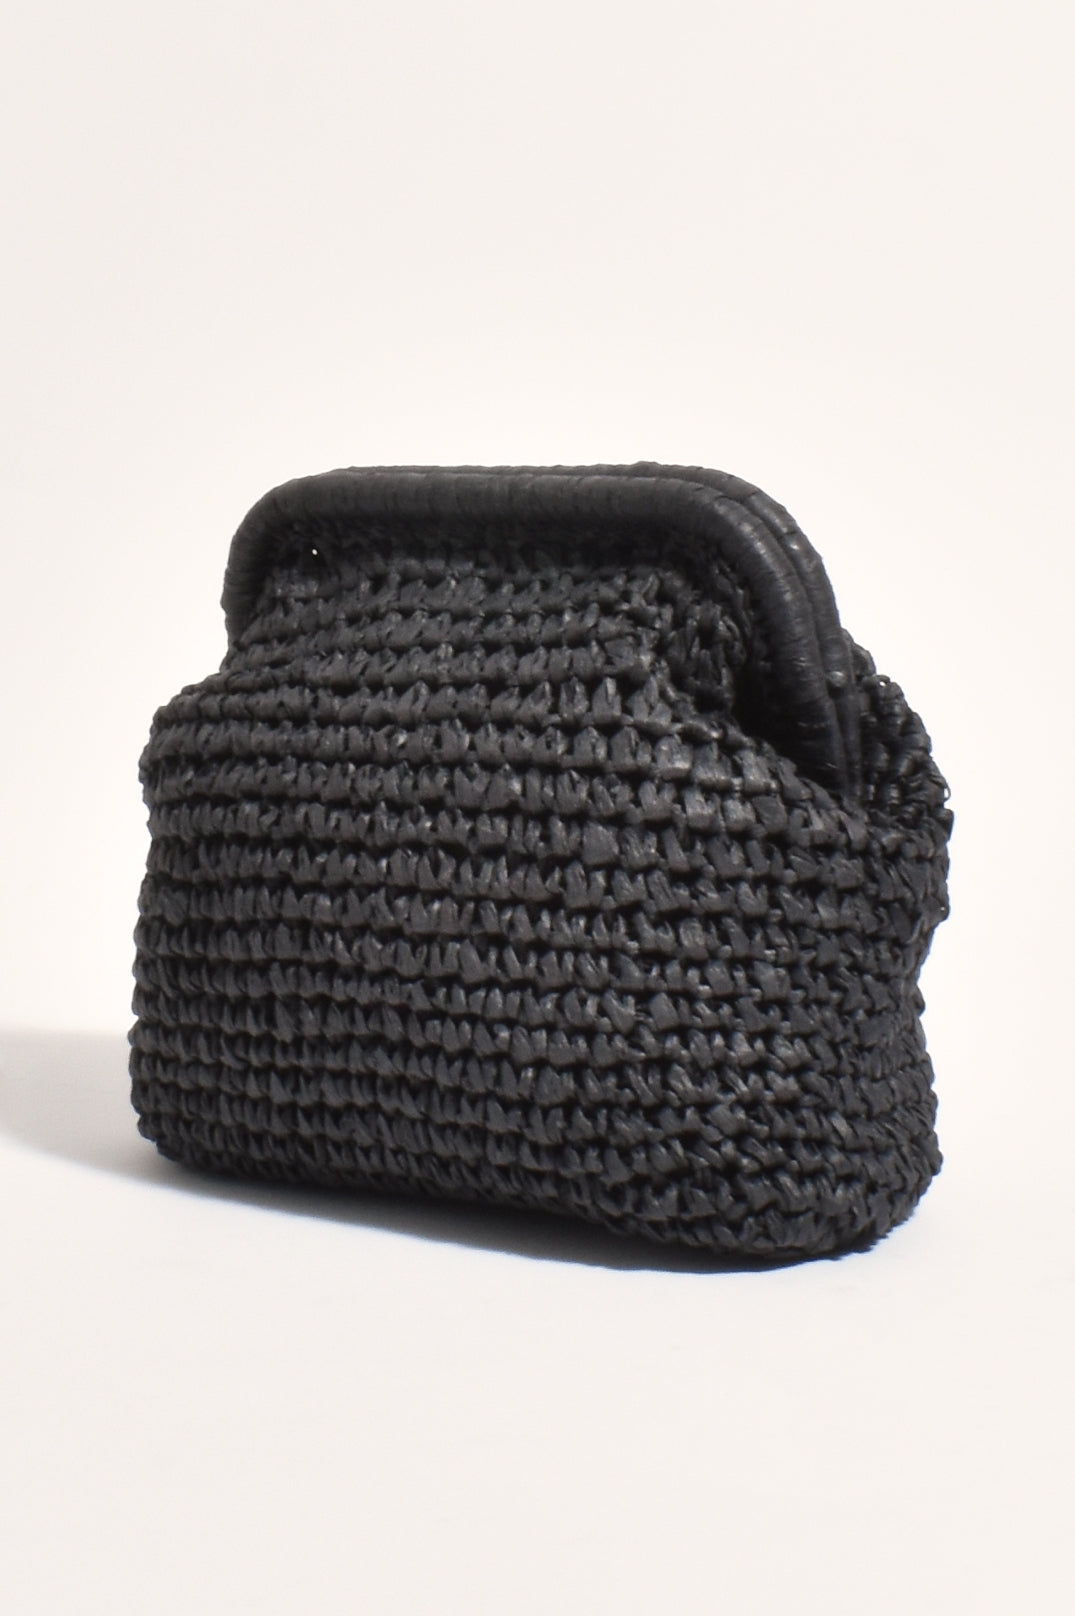 Gia woven purse clutch - black